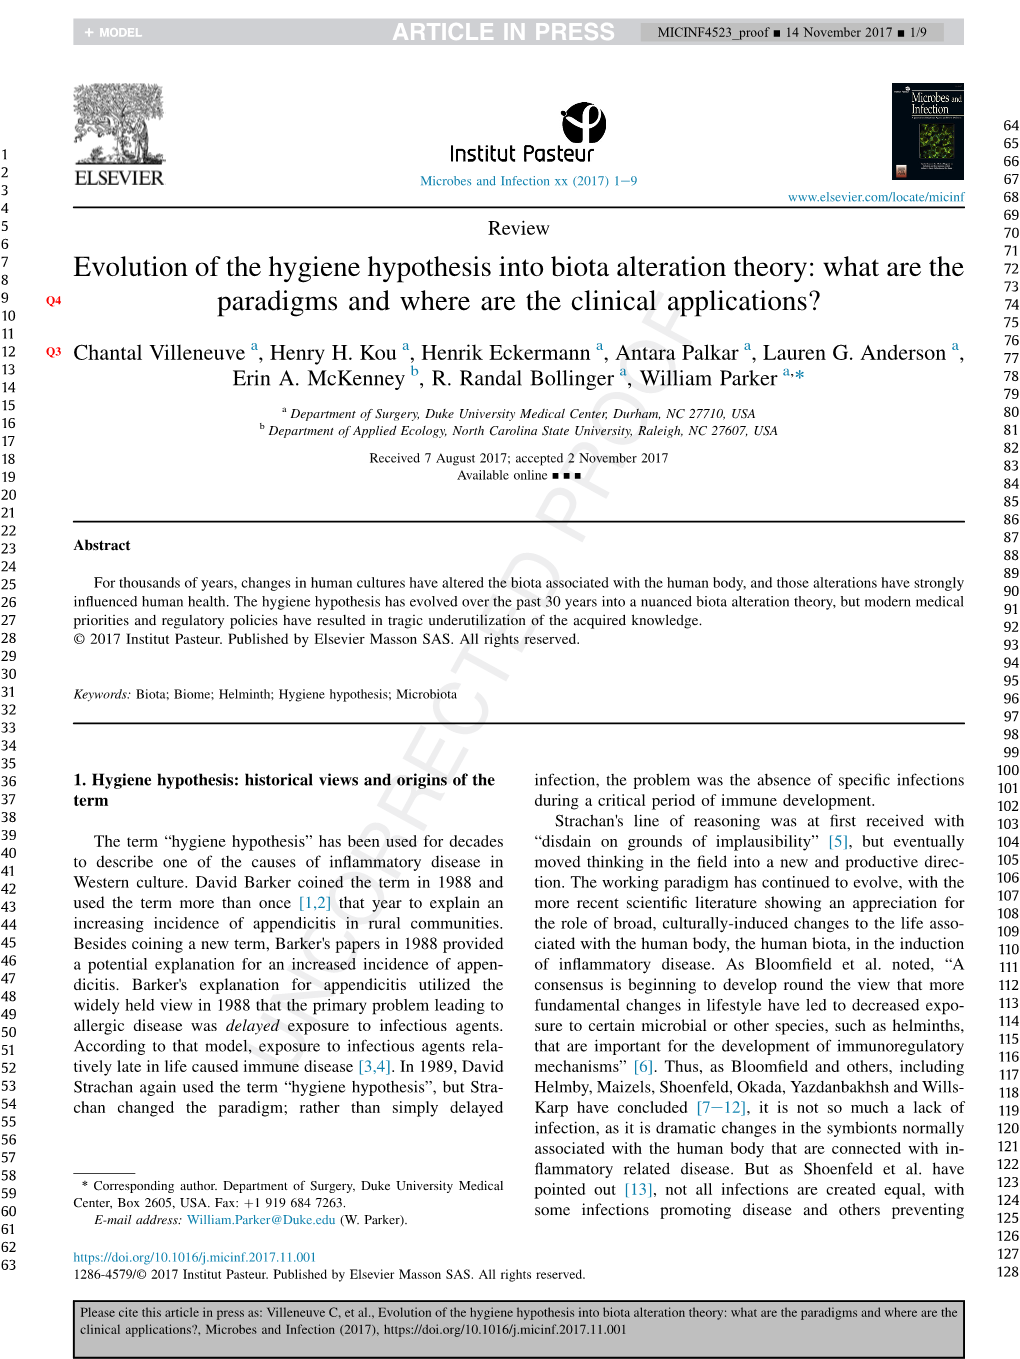 Evolution of the Hygiene Hypothesis Into Biota